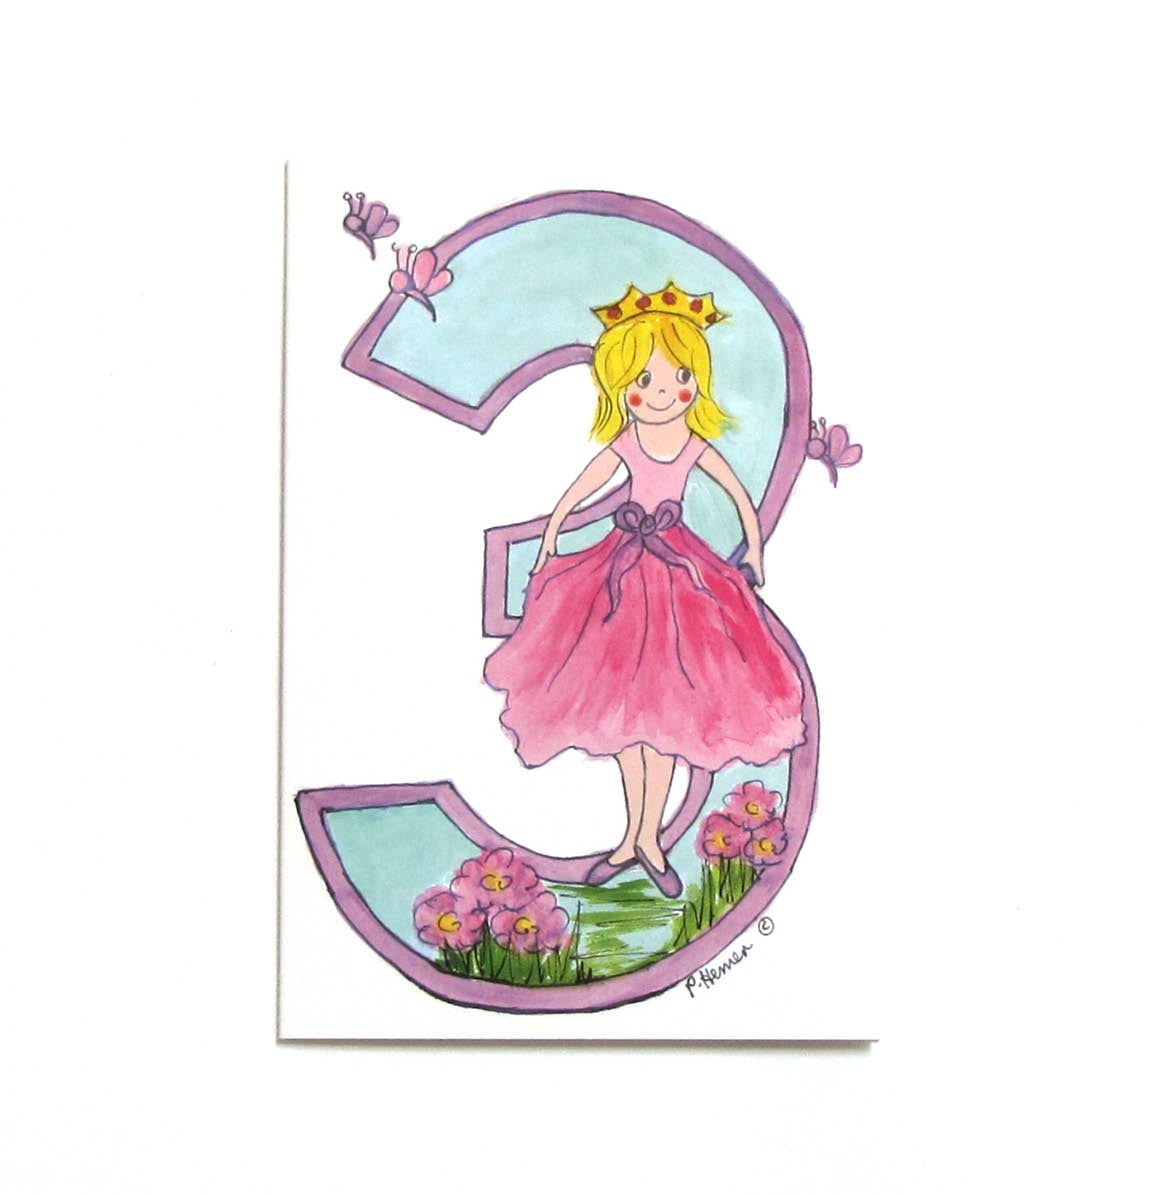 Age 3 - Princess Card